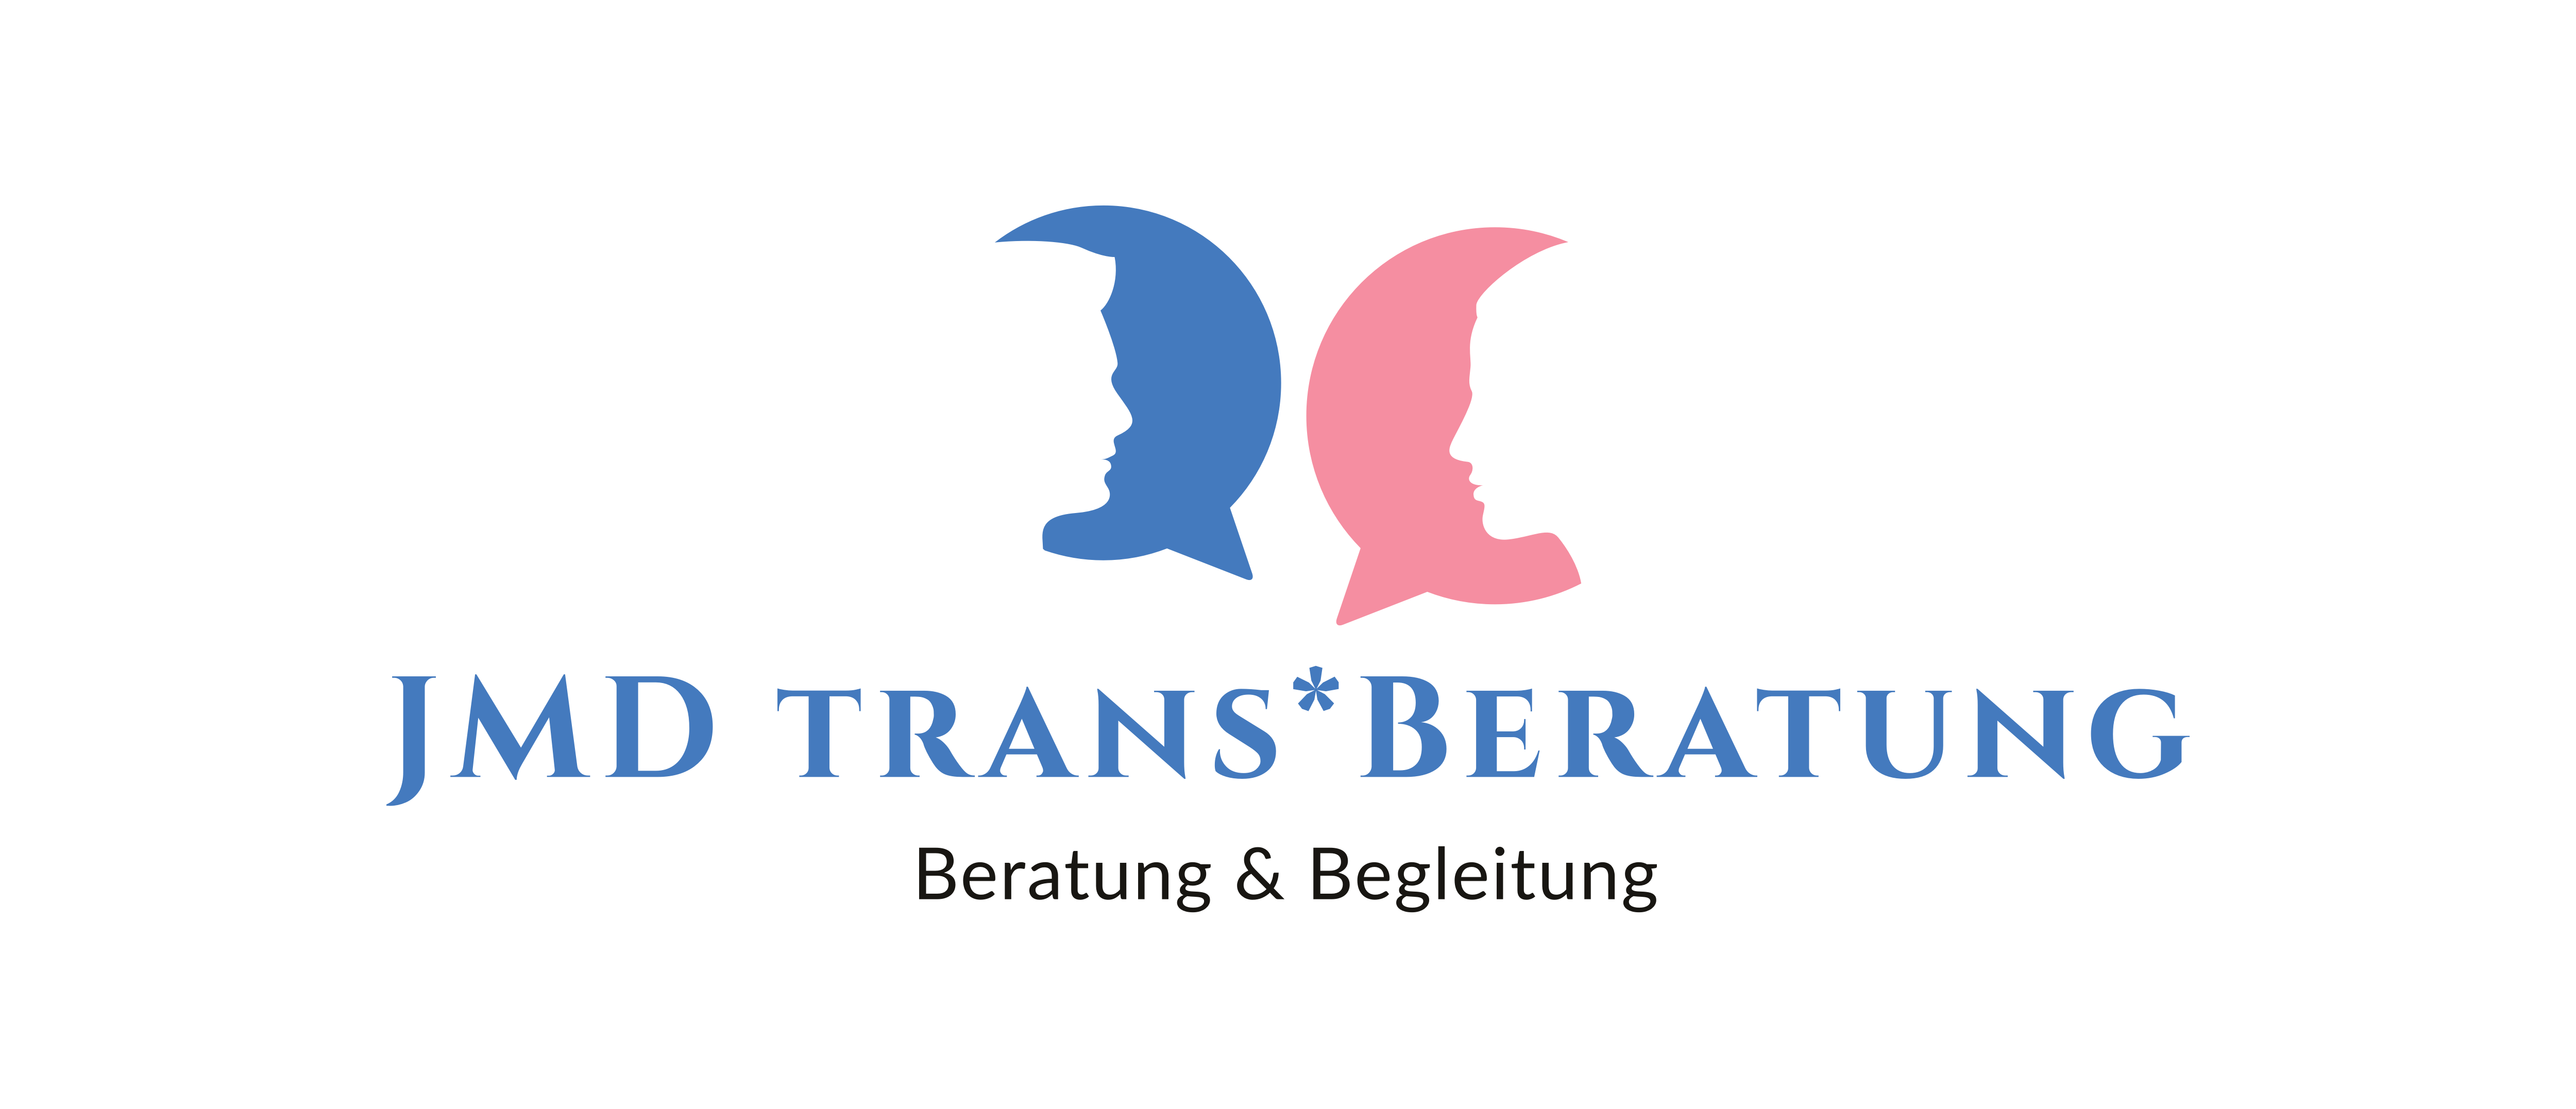 JMD transBeratung Logo Original 5000x2150